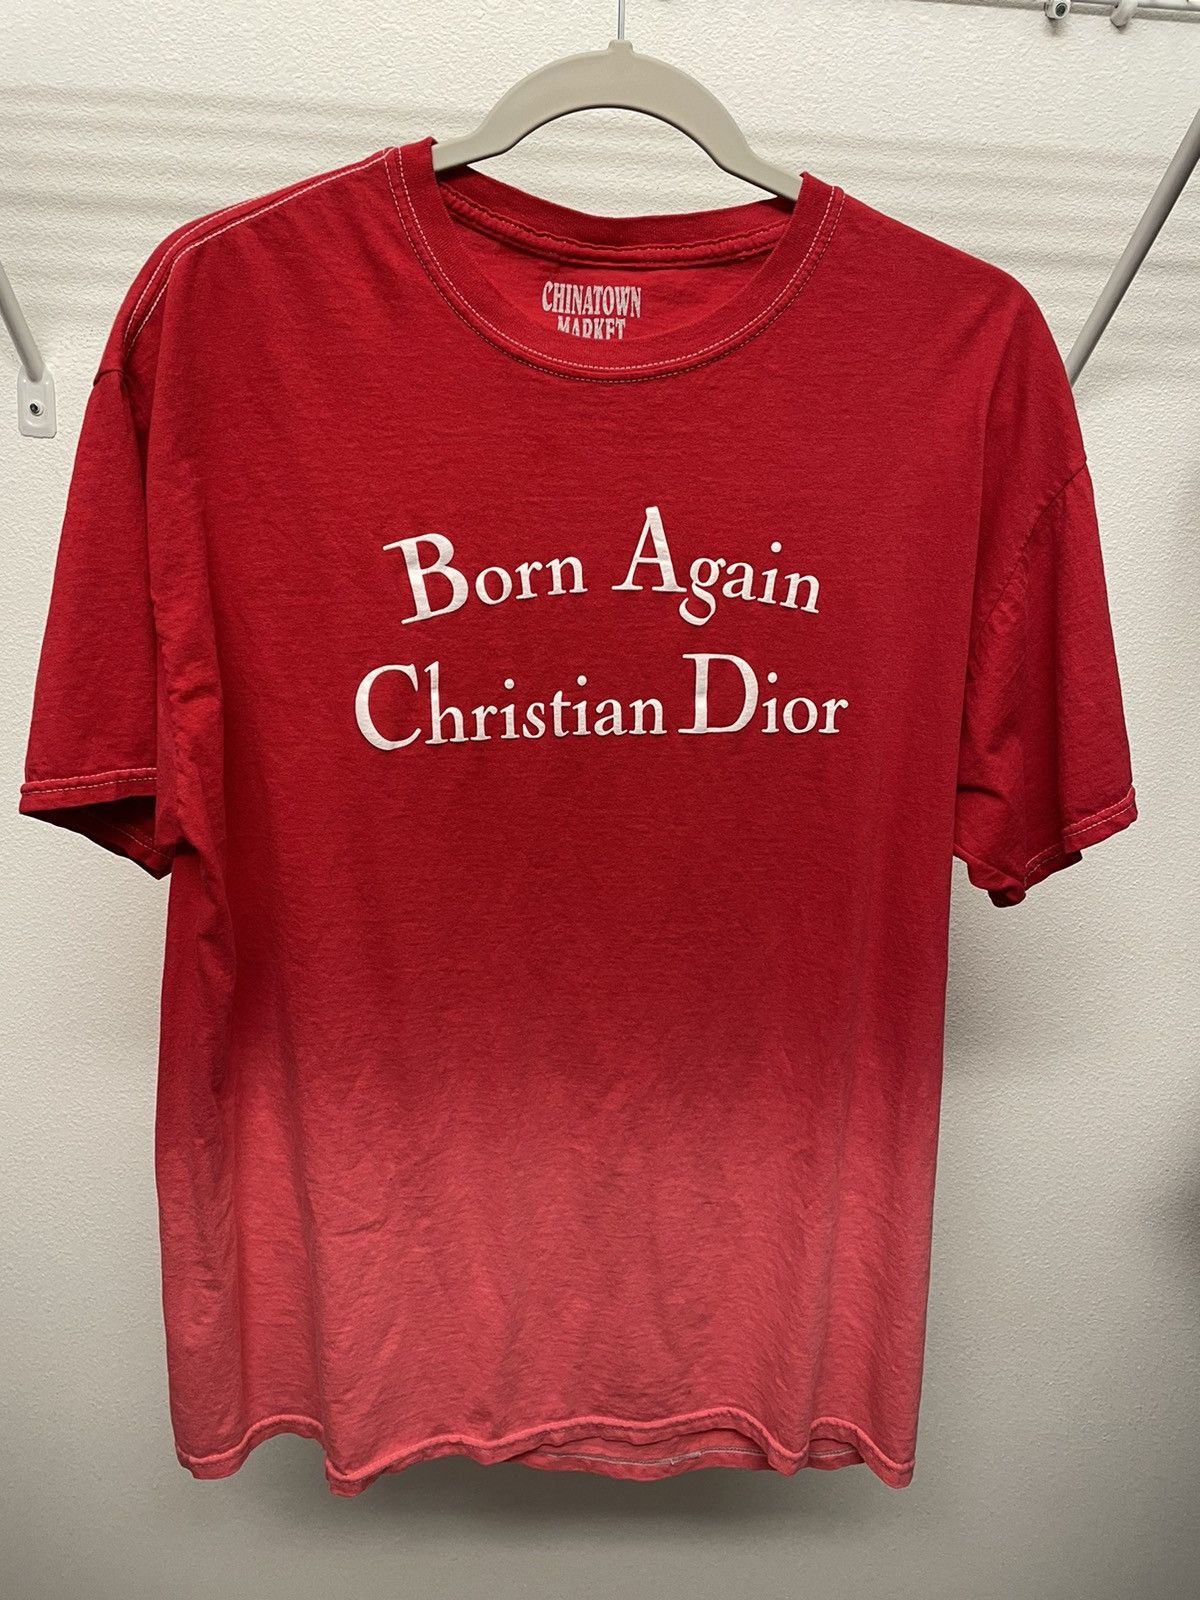 Market Born Again Christian Dior Faded Red | Grailed